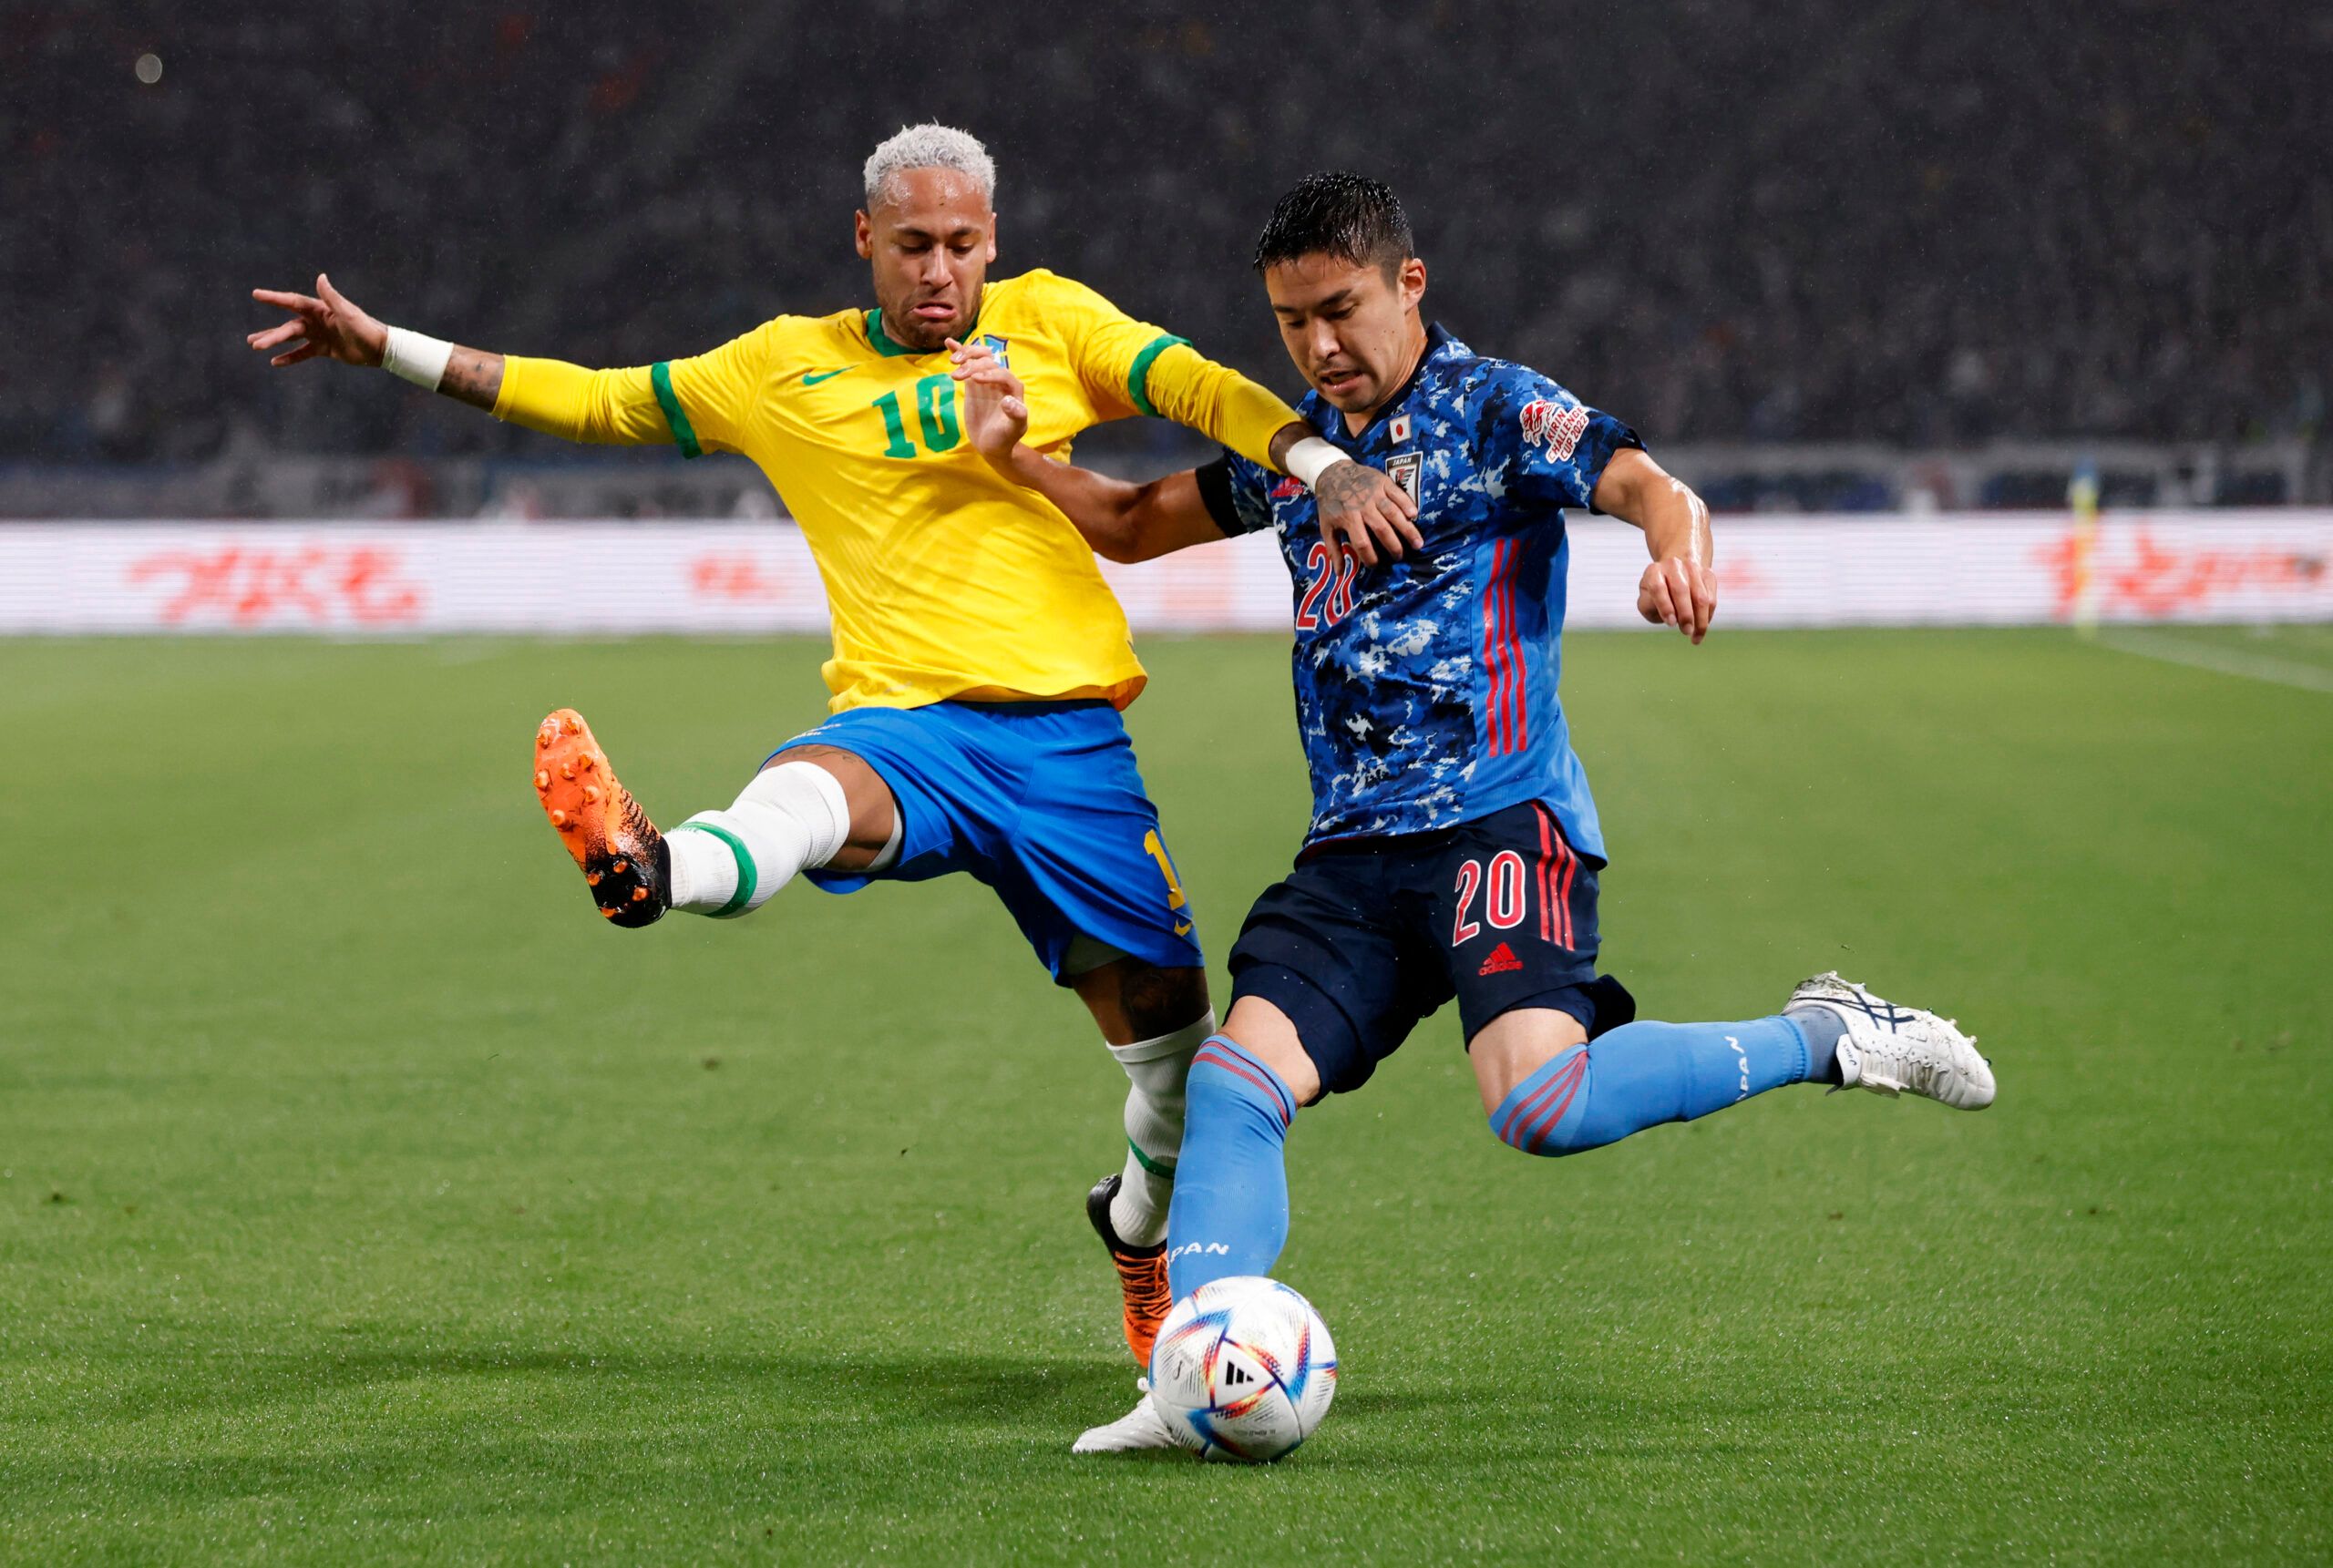 Soccer Football - International friendly - Japan v Brazil - Japan National Stadium, Tokyo, Japan - June 6, 2022 Brazil's Neymar in action with Japan's Yuta Nakayama REUTERS/Issei Kato